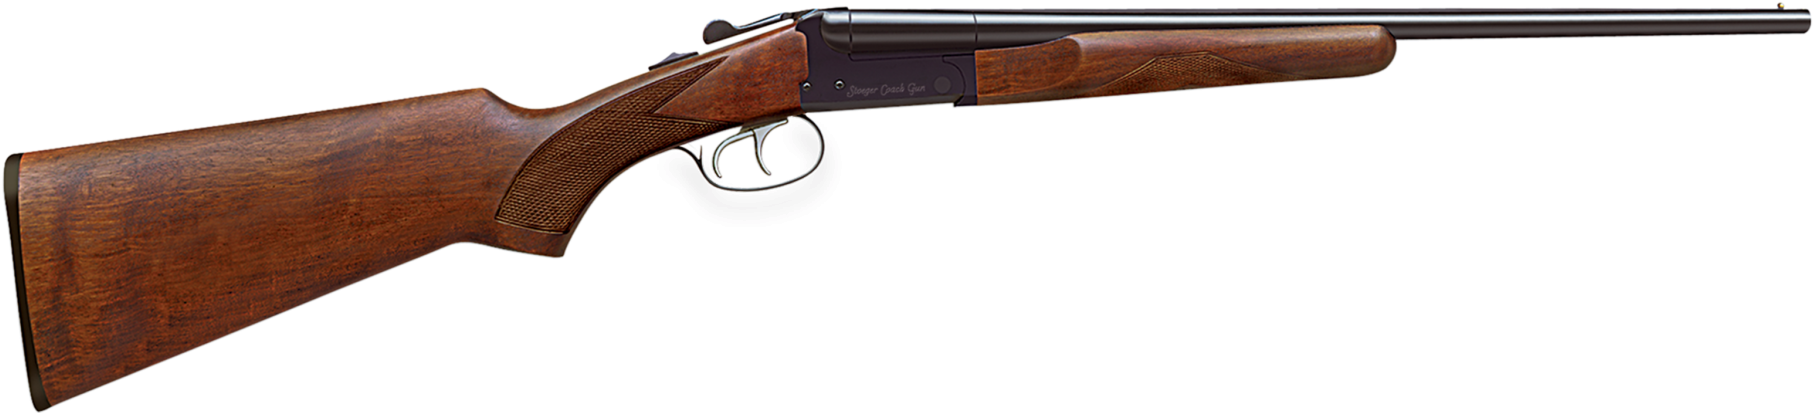 Drawn Shotgun Shot Gun - 12 Gauge Stoeger Coach Gun (2000x704)